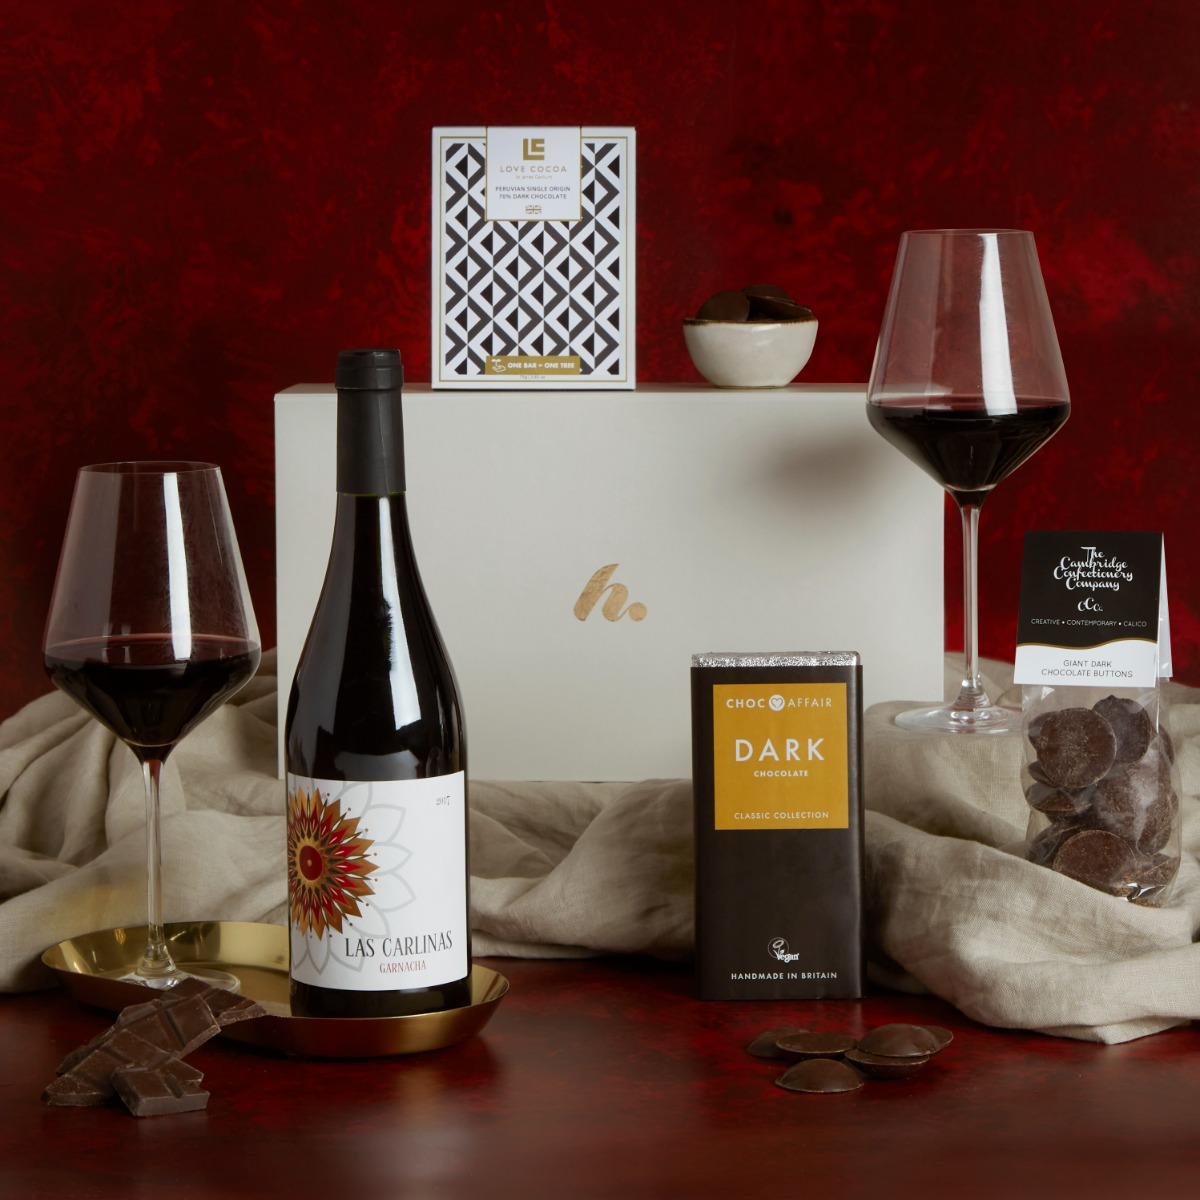 Valentine's Red Wine & Dark Chocolates Wine and chocolate gifts UK Hampers.com